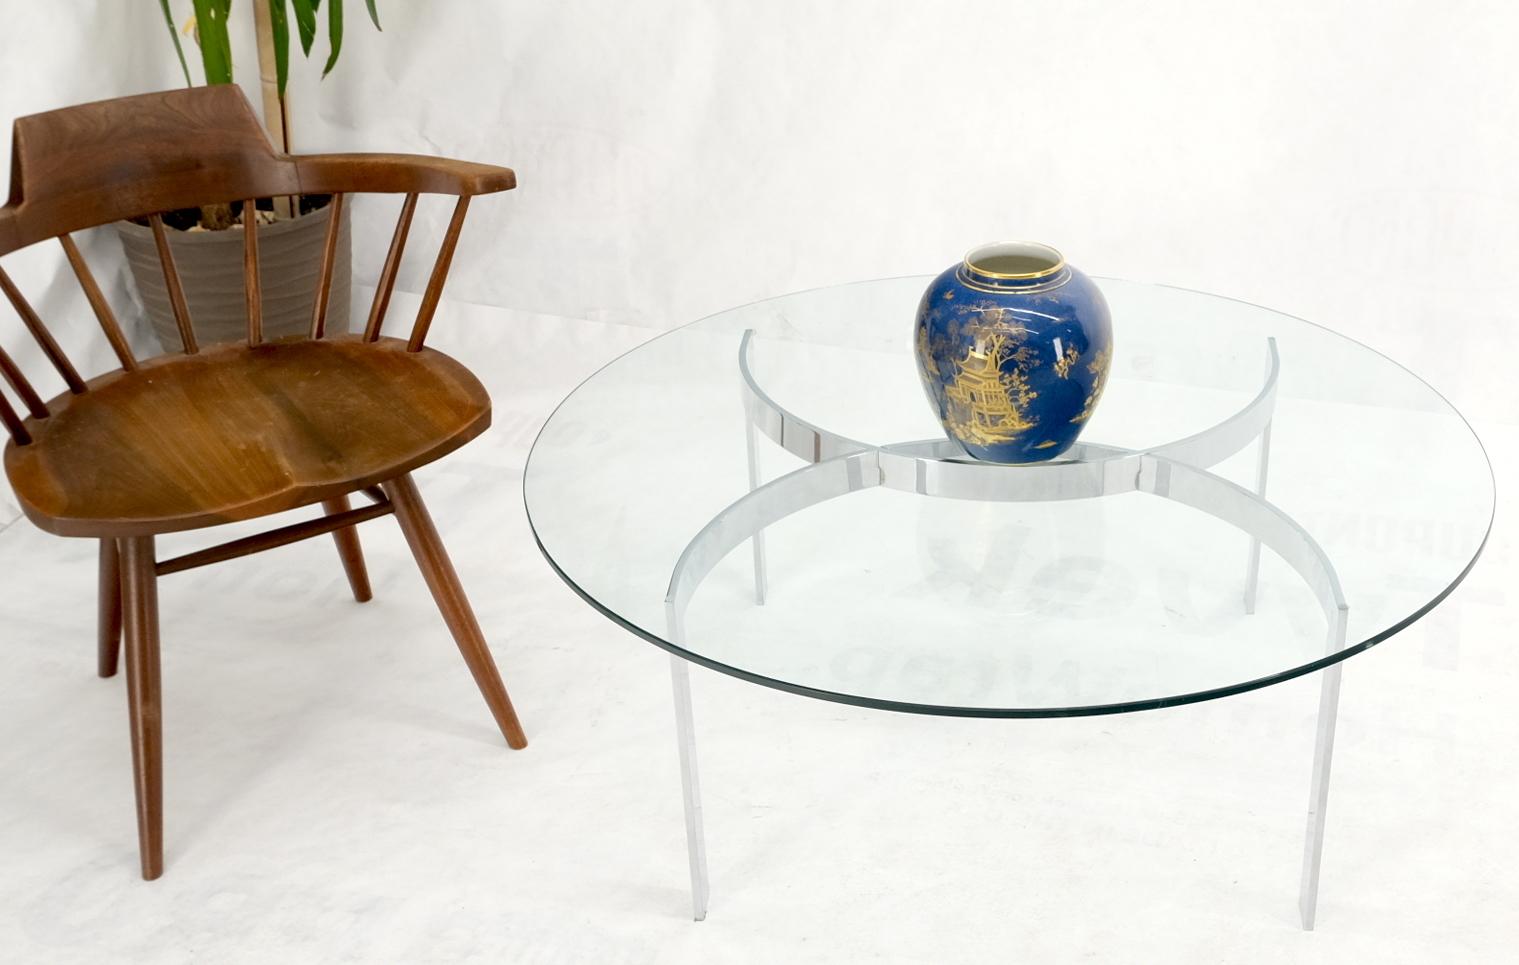 Roundglass top crome interlocking half circle shape figures resembling Chanel logo coffee table.
Bauhaus Mid-Century Modern decor match.